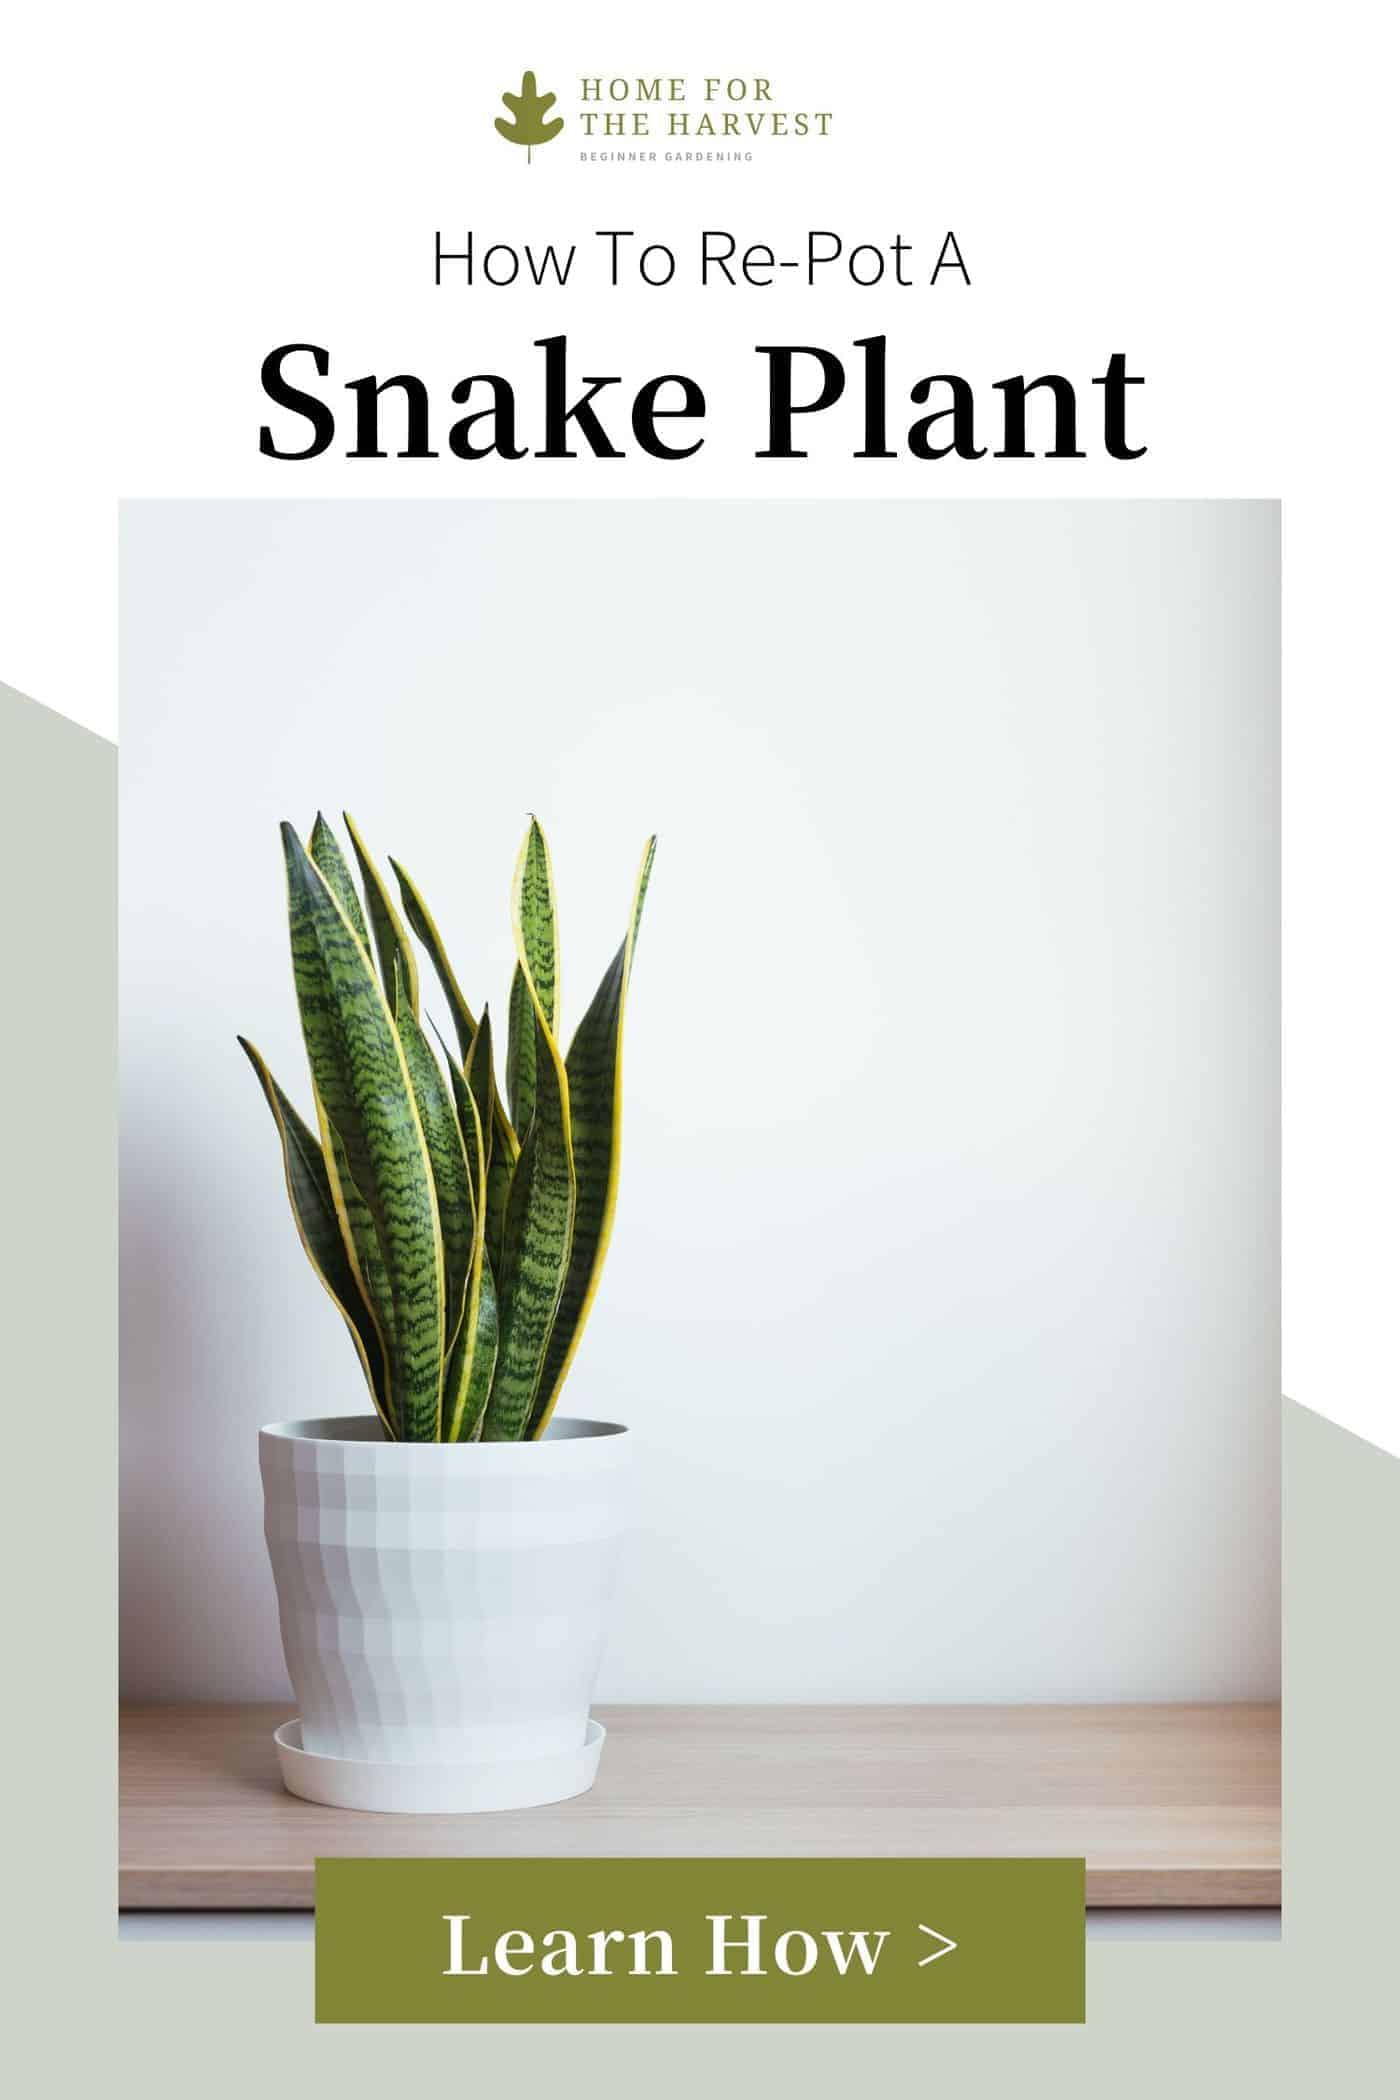 Repotting Snake Plant - HOW TO via @home4theharvest